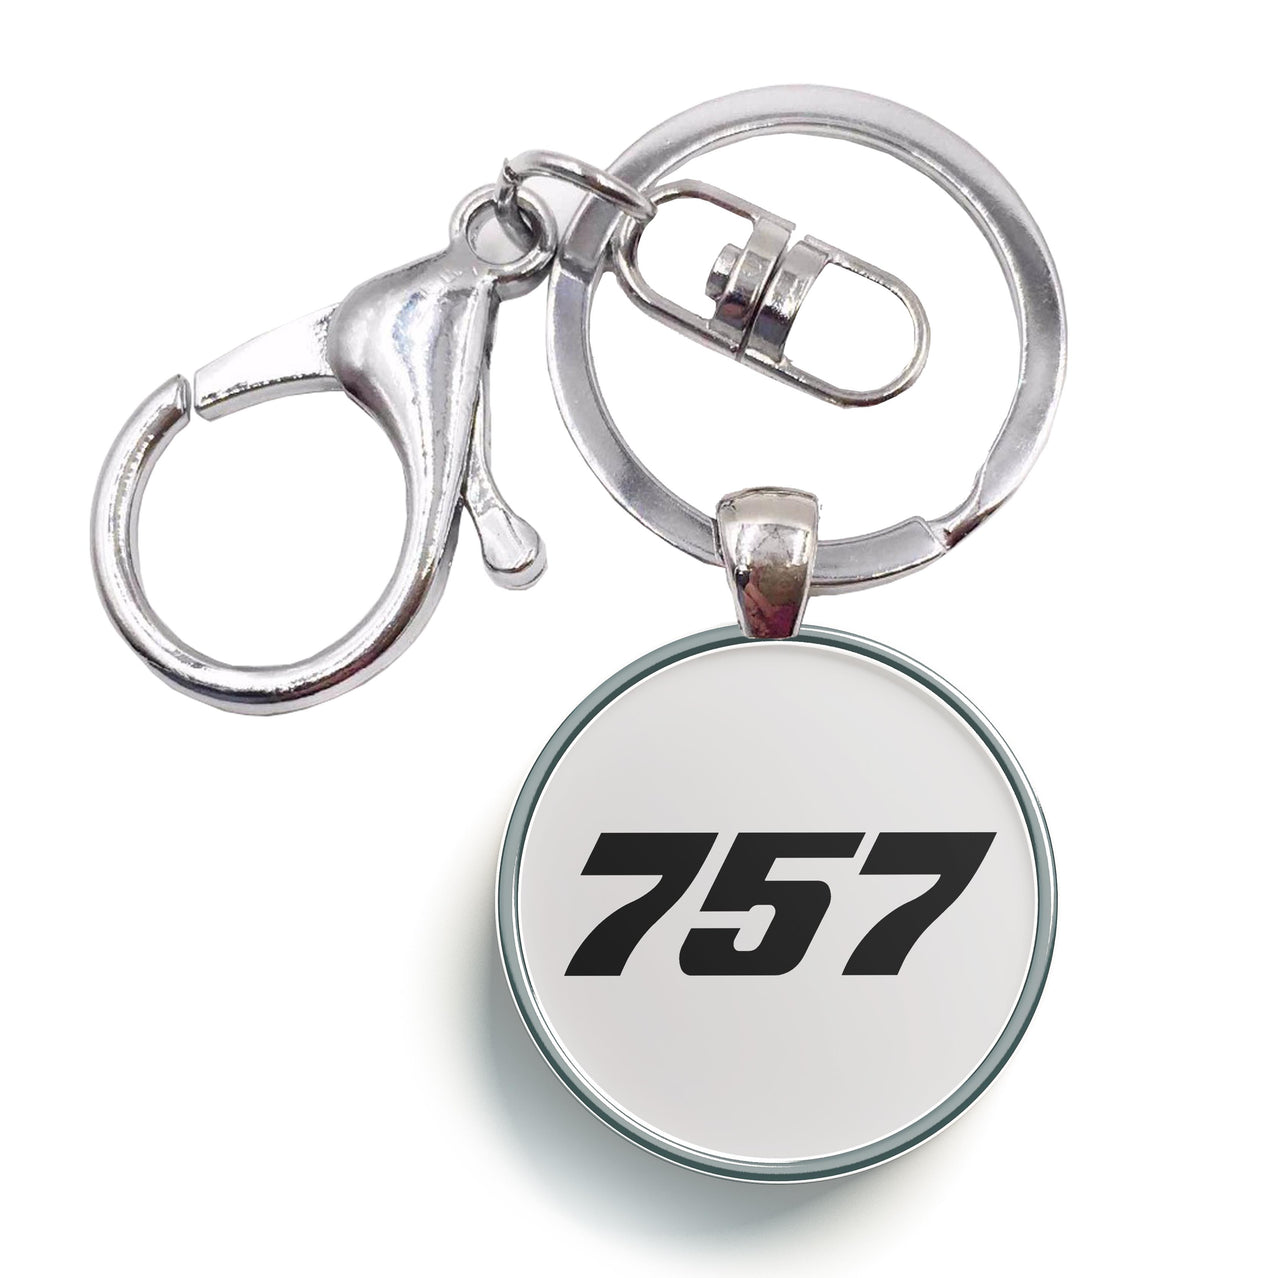 757 Flat Text Designed Circle Key Chains